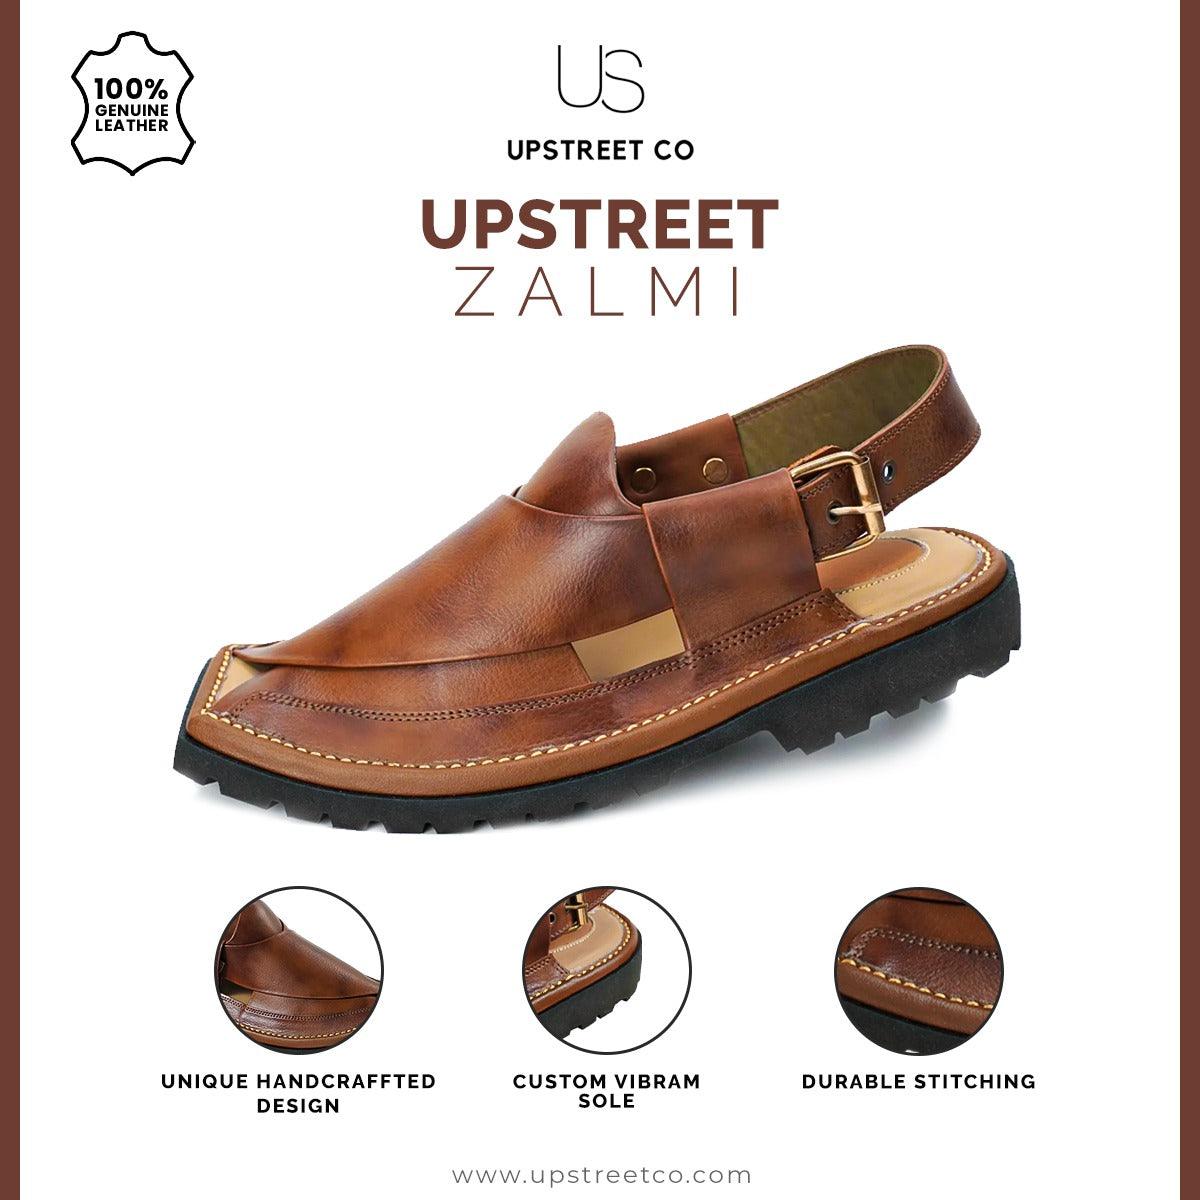 Upstreet Zalmi - Upstreet Co